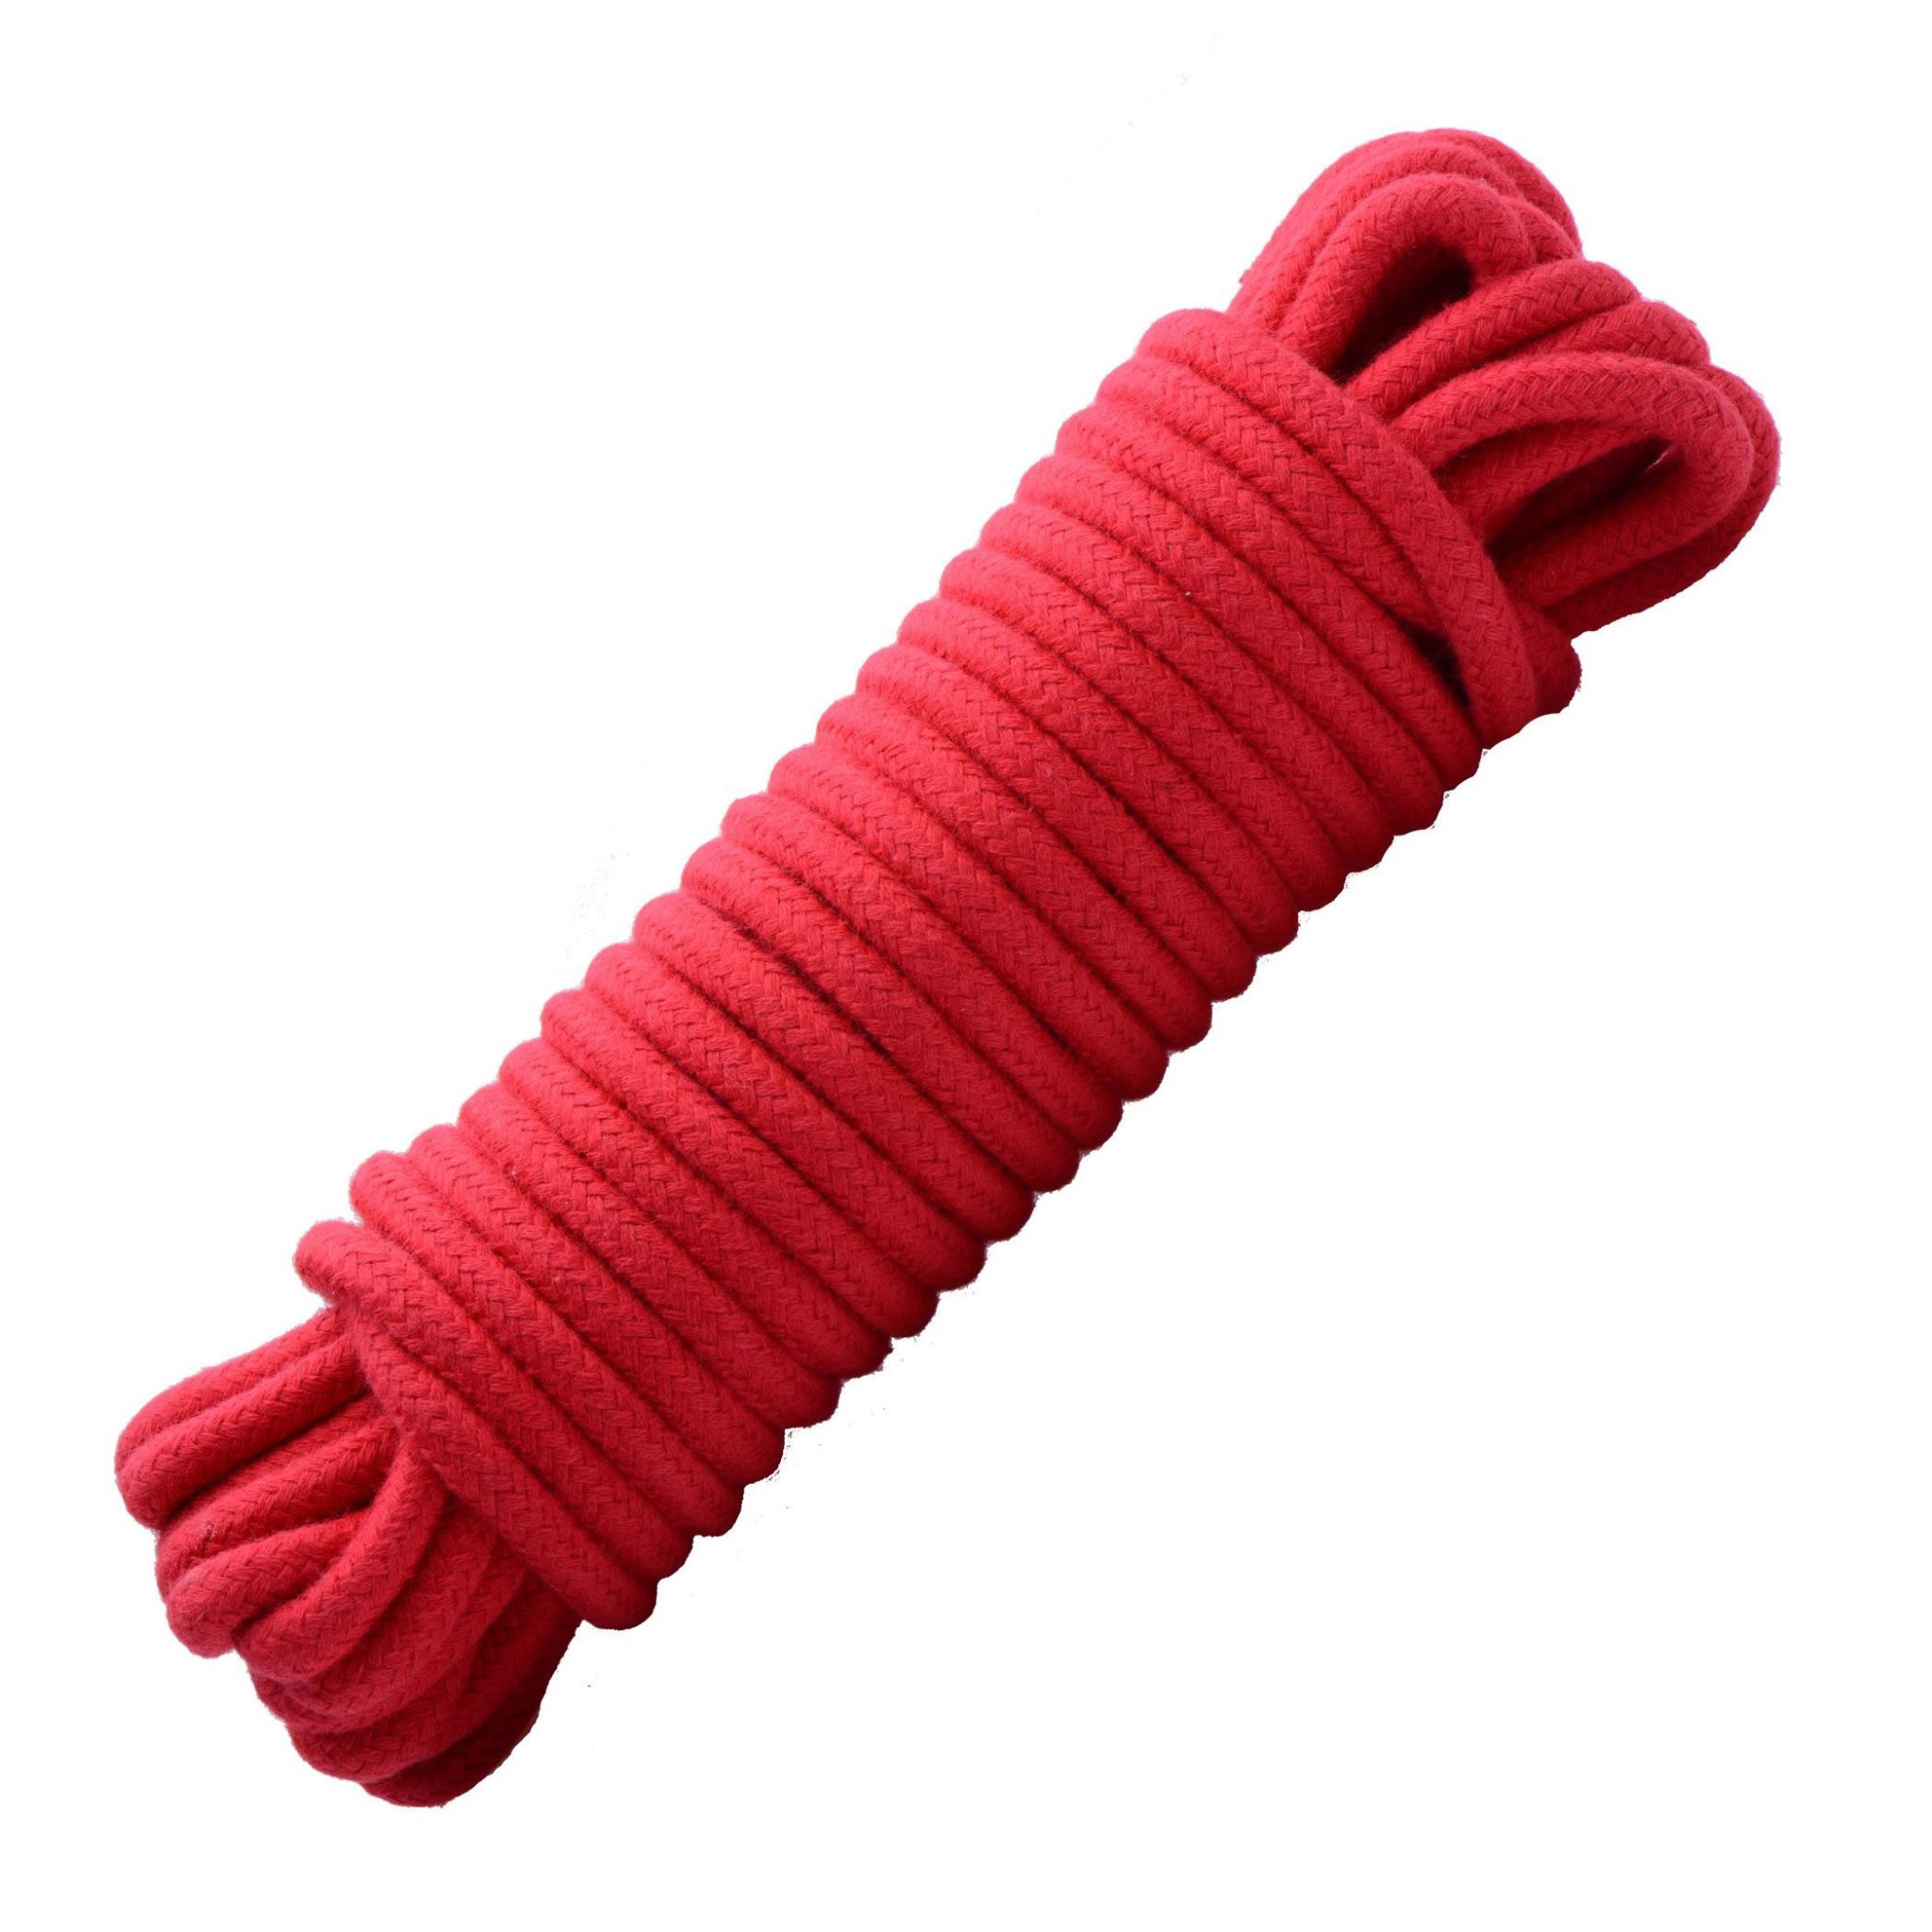 32 Foot Cotton Bondage Rope – Red